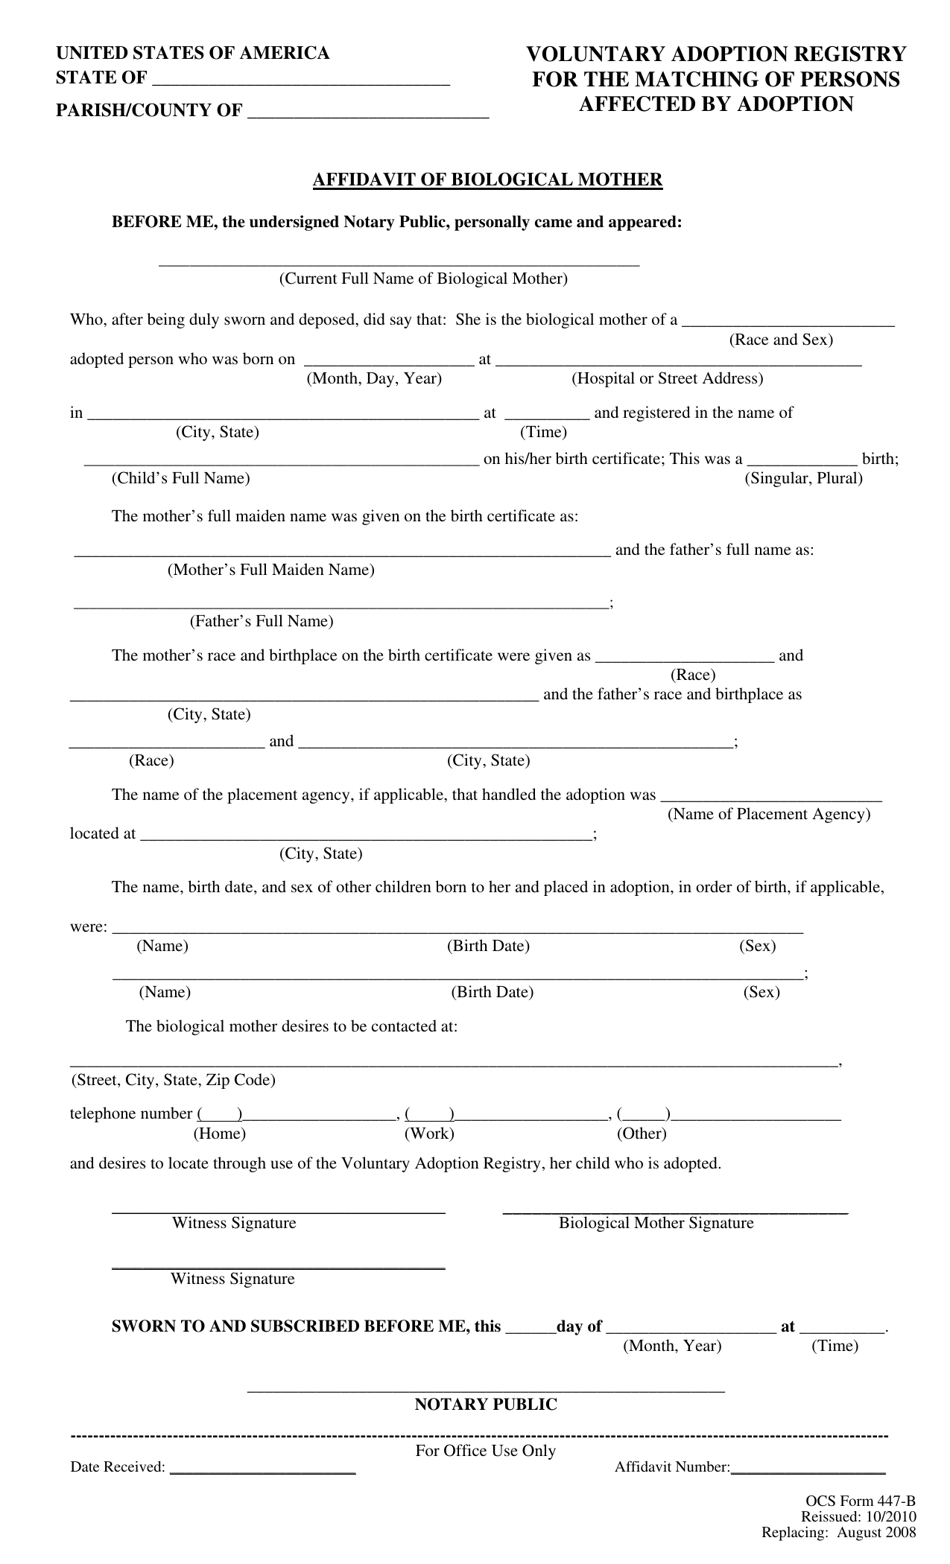 Form 447-B Affidavit of Biological Mother - Louisiana, Page 1